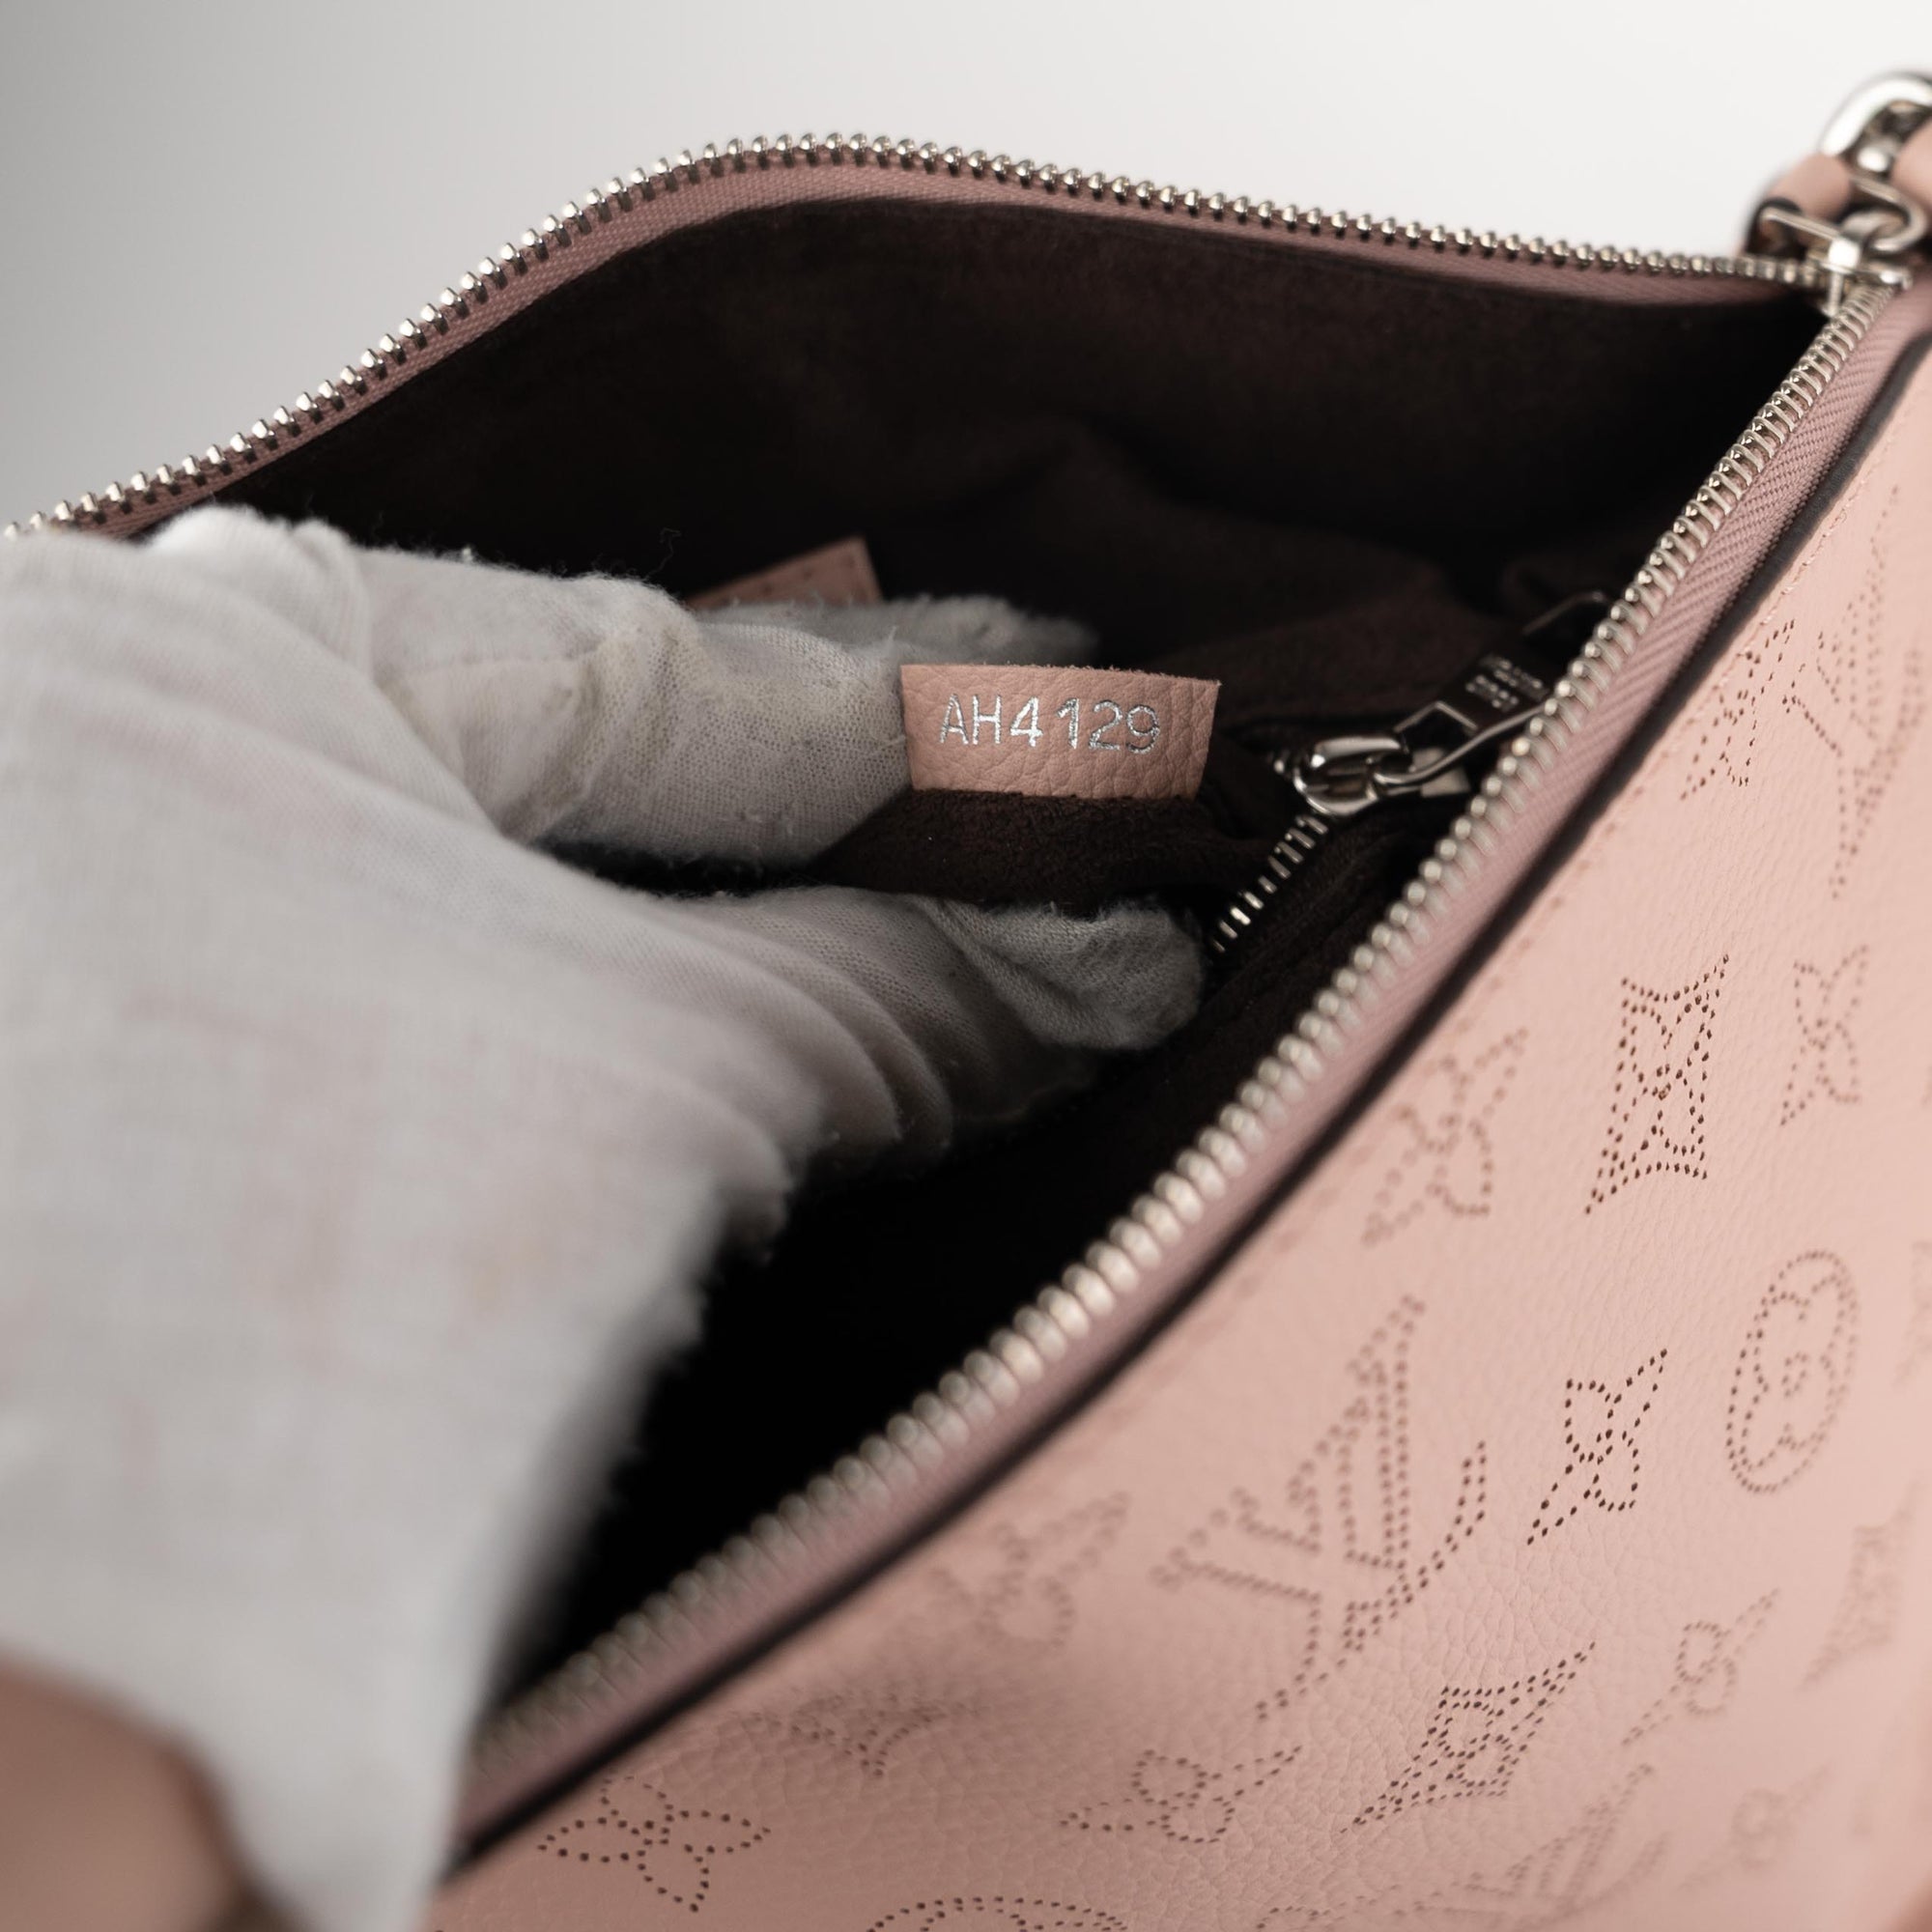 Louis Vuitton, Bags, Louis Vuitton Originalauthentic Baby Lone Bag